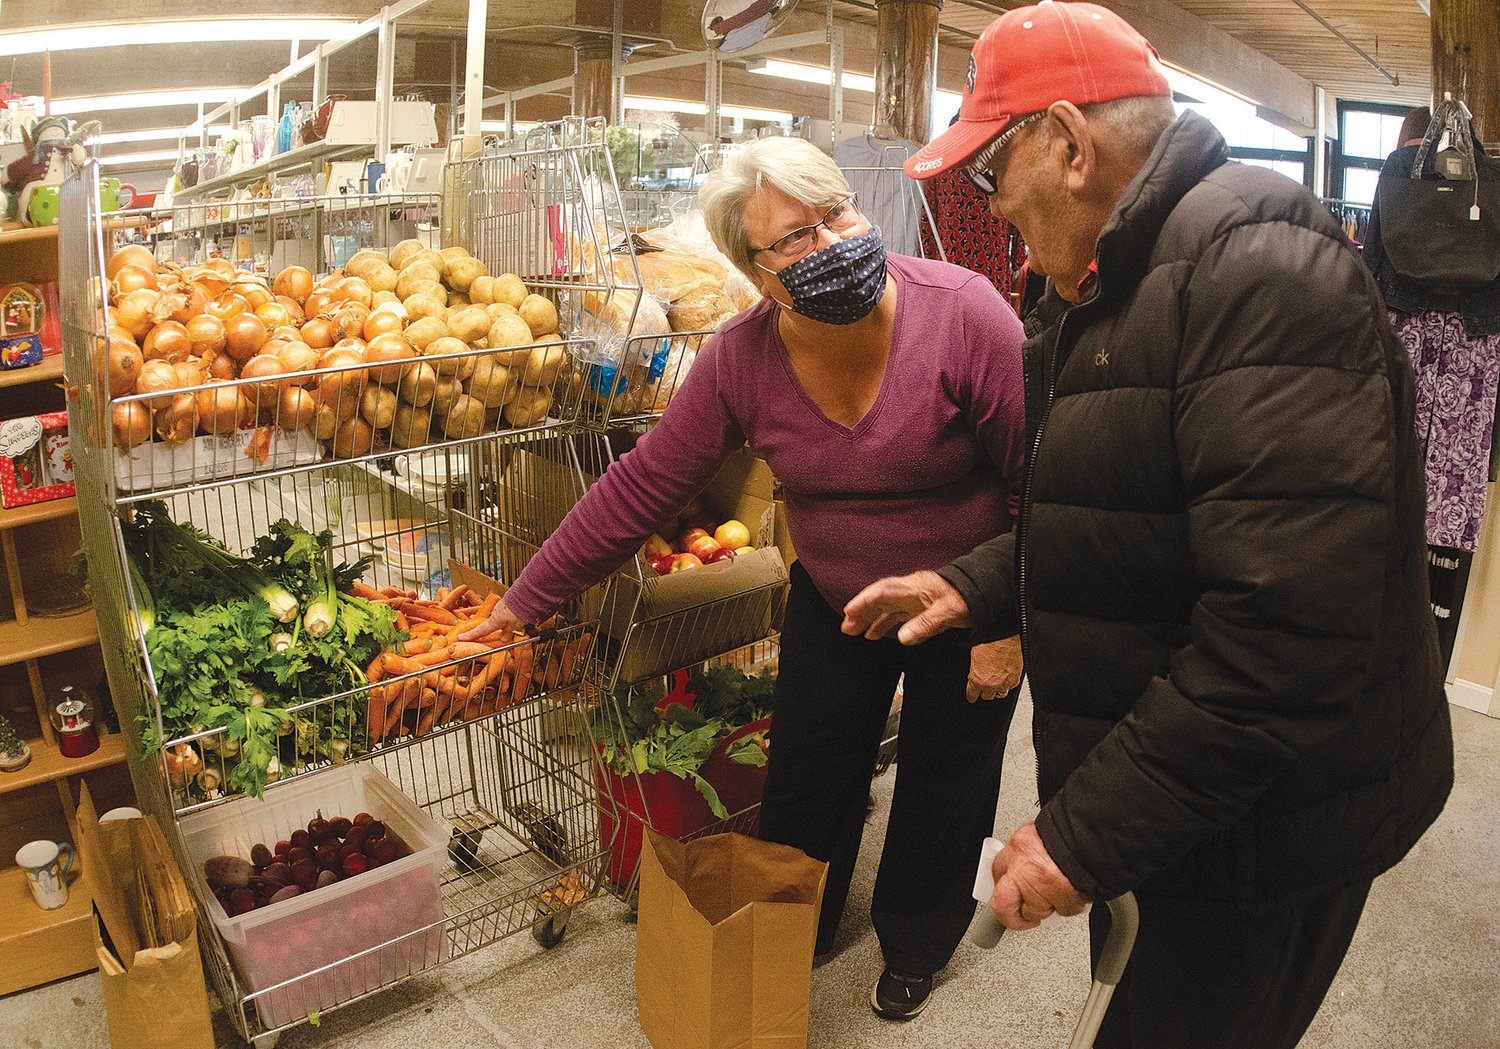 Volunteer Elizabeth Peters helps client Joe Barreiro with selecting produce during a visit to the East Bay Food Pantry in Bristol last week.